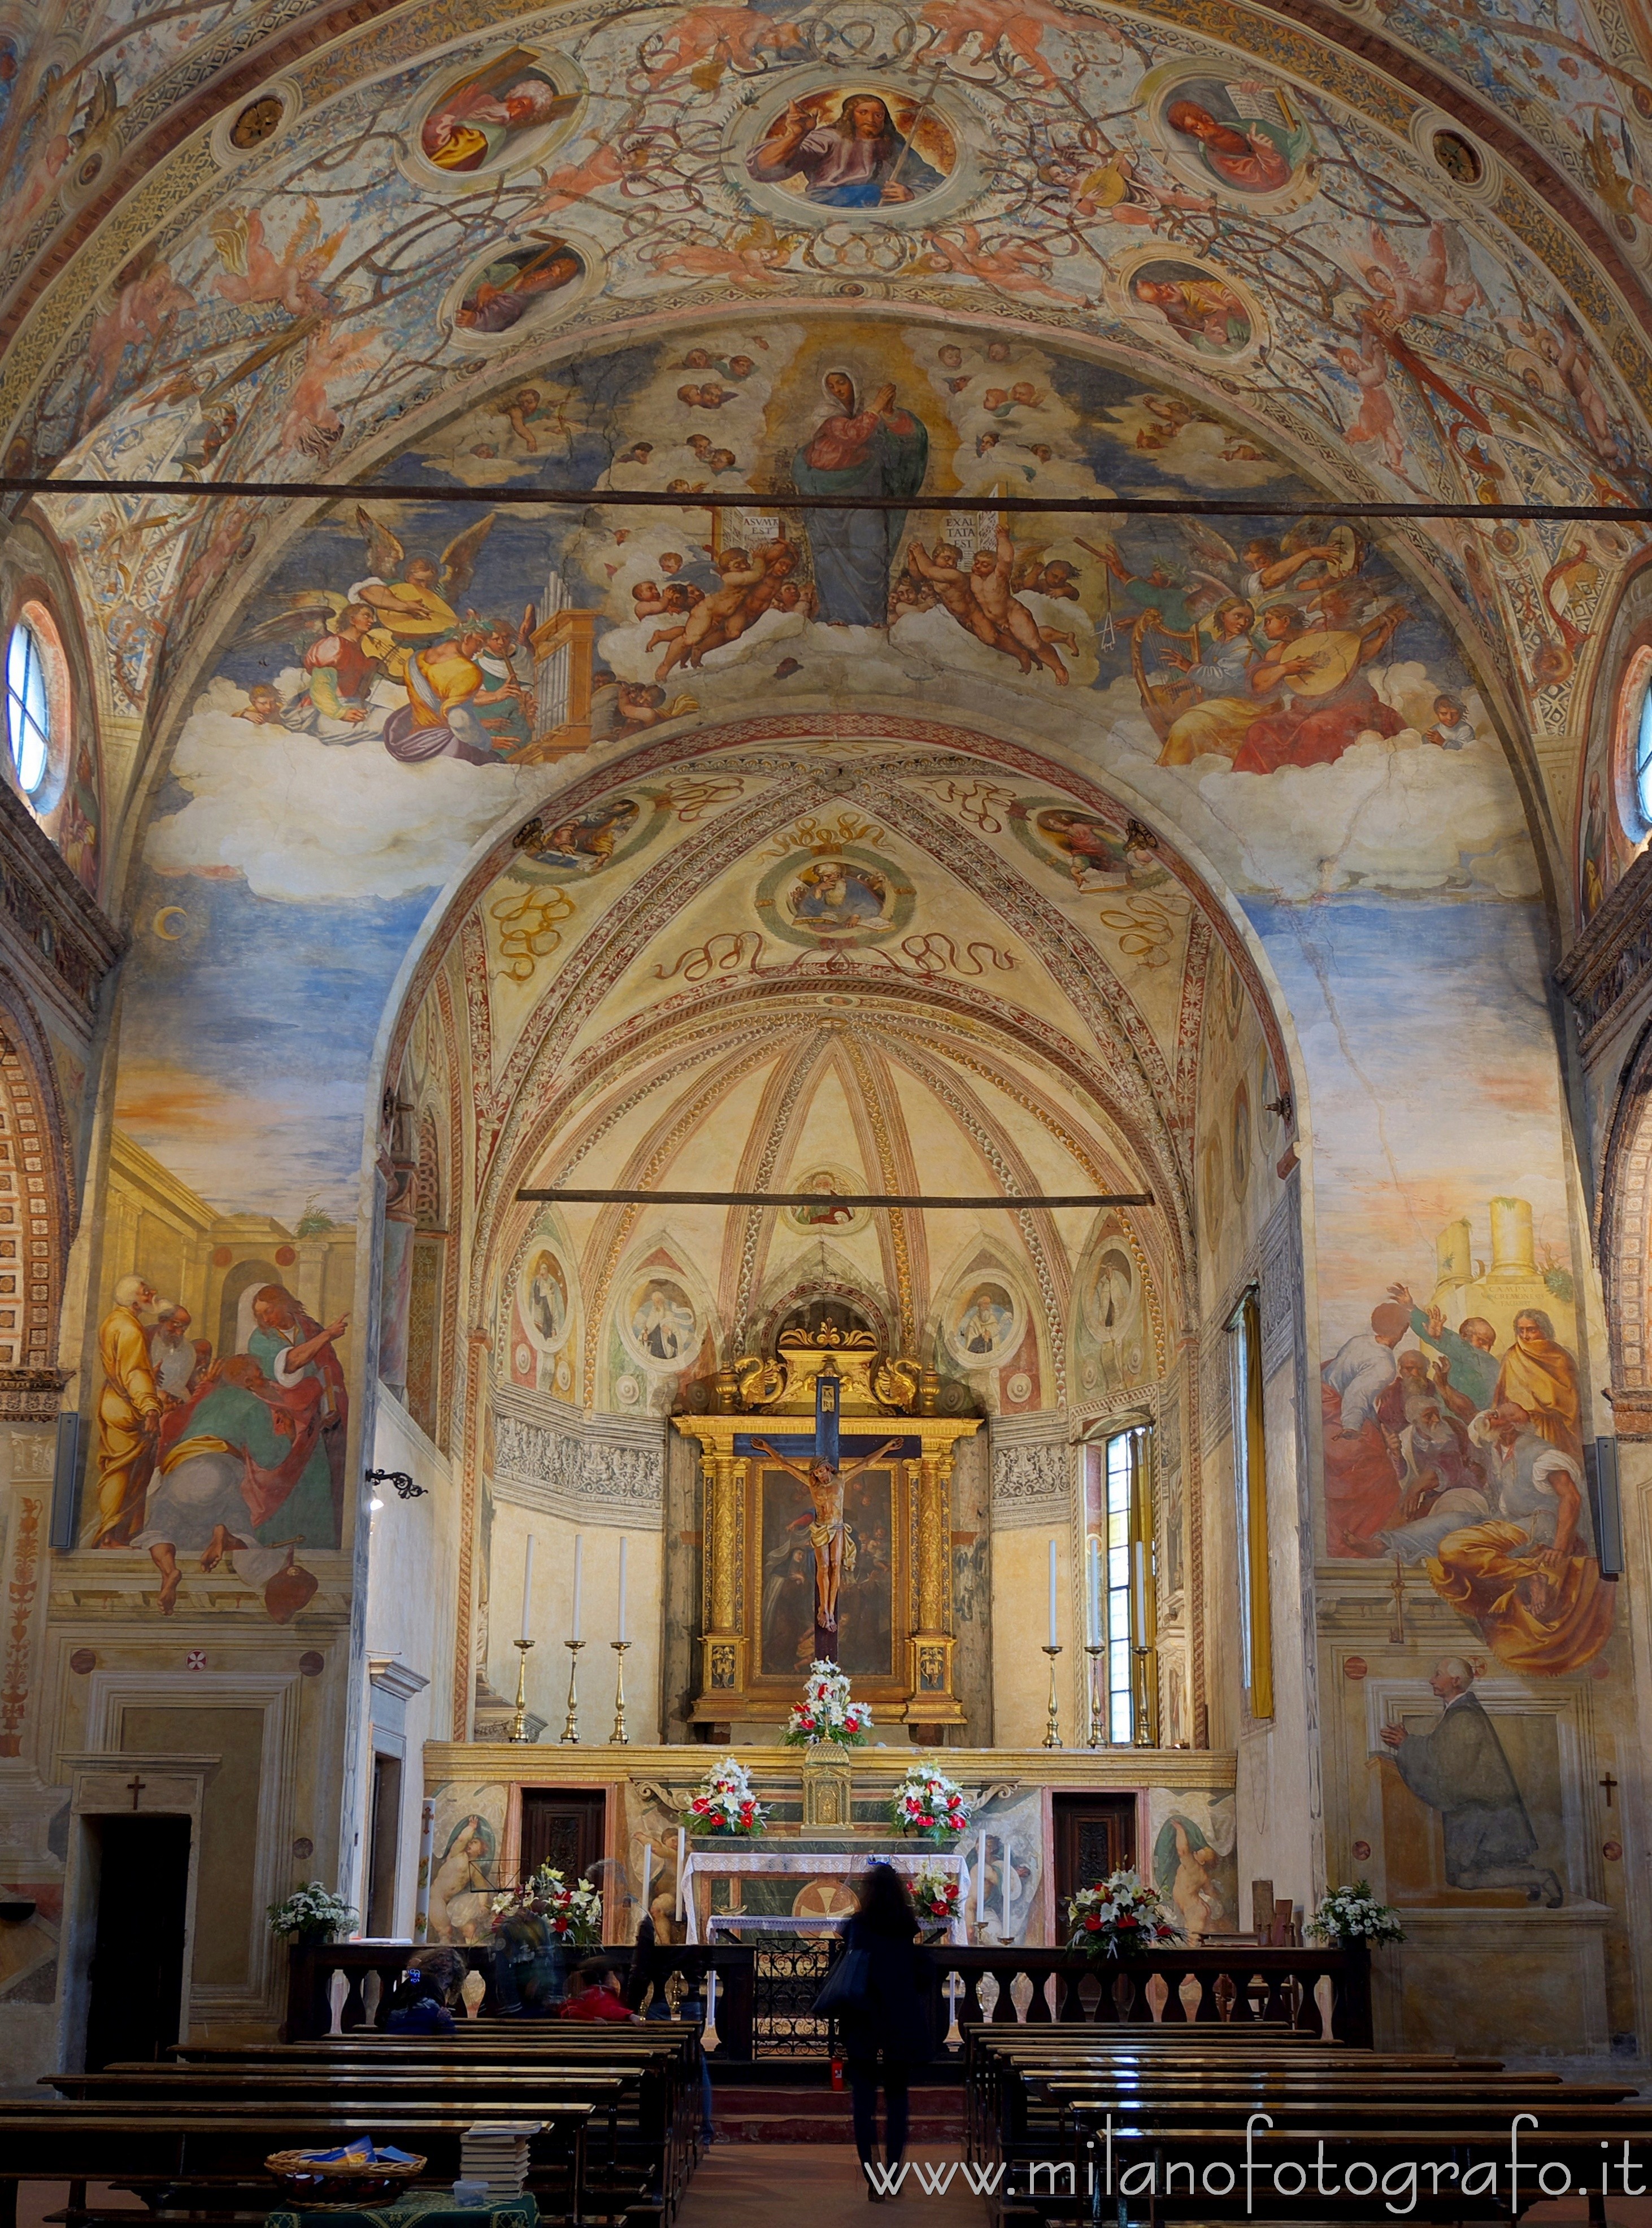 Soncino (Cremona, Italy): Presbytery and great arch in the Church of Santa Maria delle Grazie - Soncino (Cremona, Italy)